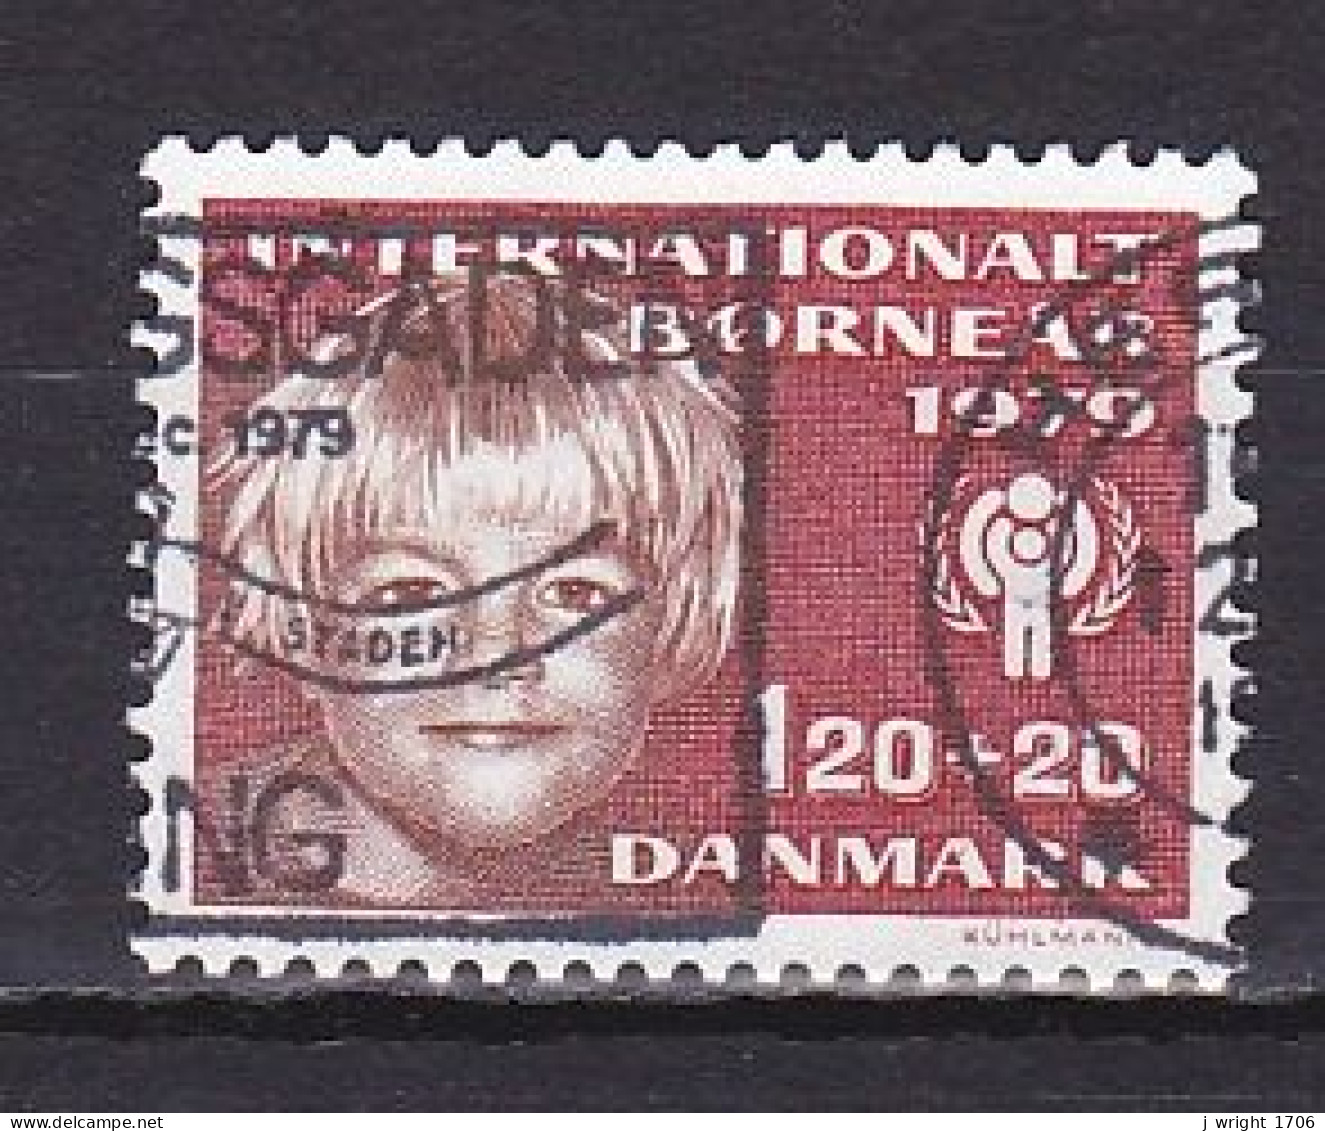 Denmark, 1979, International Year Of The Child, 120ø + 20ø, USED - Gebraucht